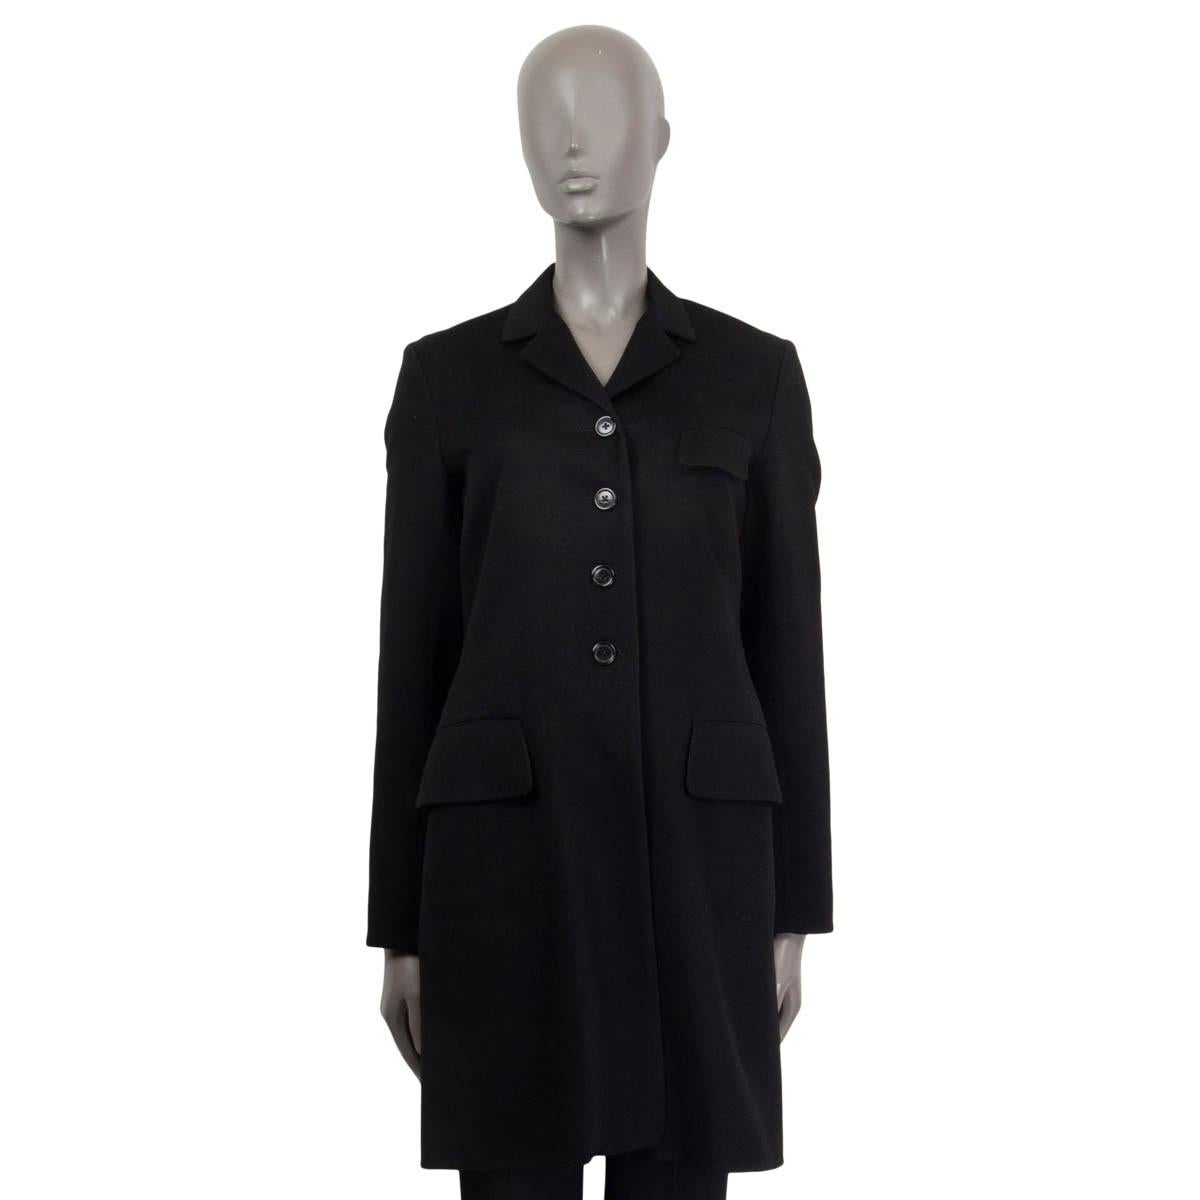 Black JIL SANDER black cashmere CLASSIC Coat Jacket 36 S For Sale